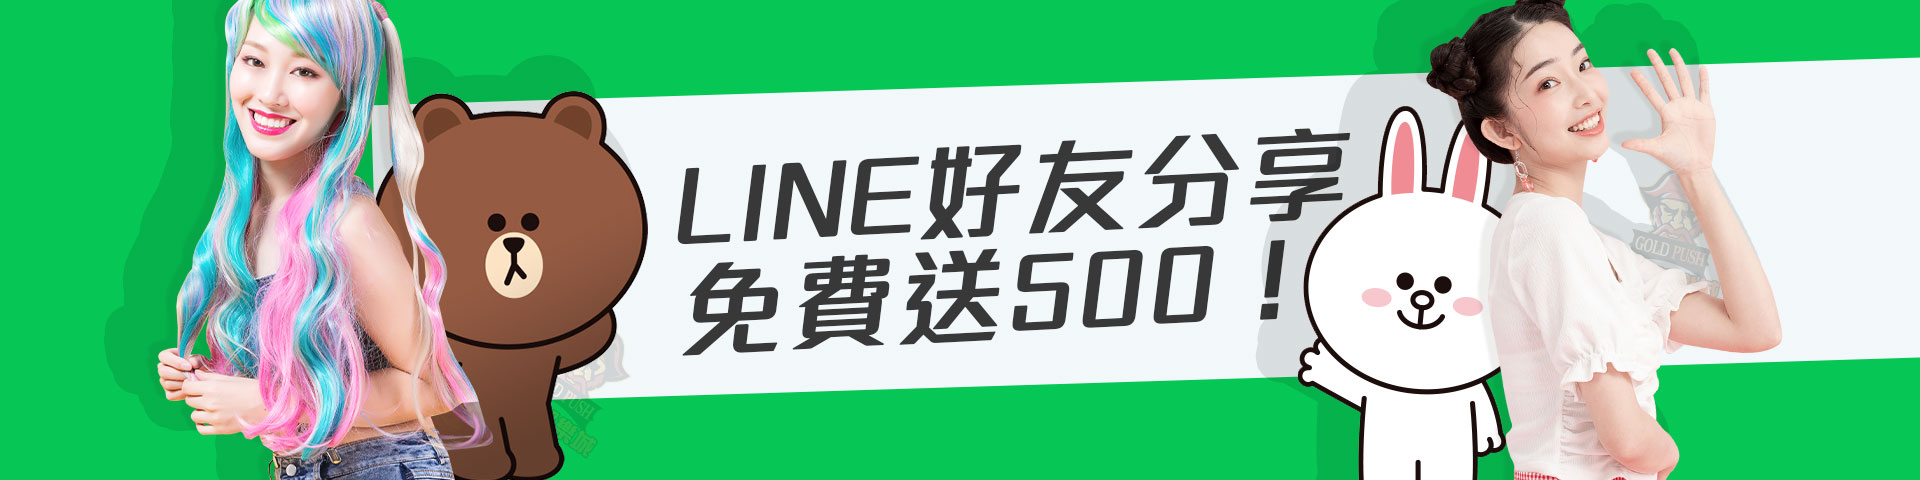 Line分享好友免費送500！